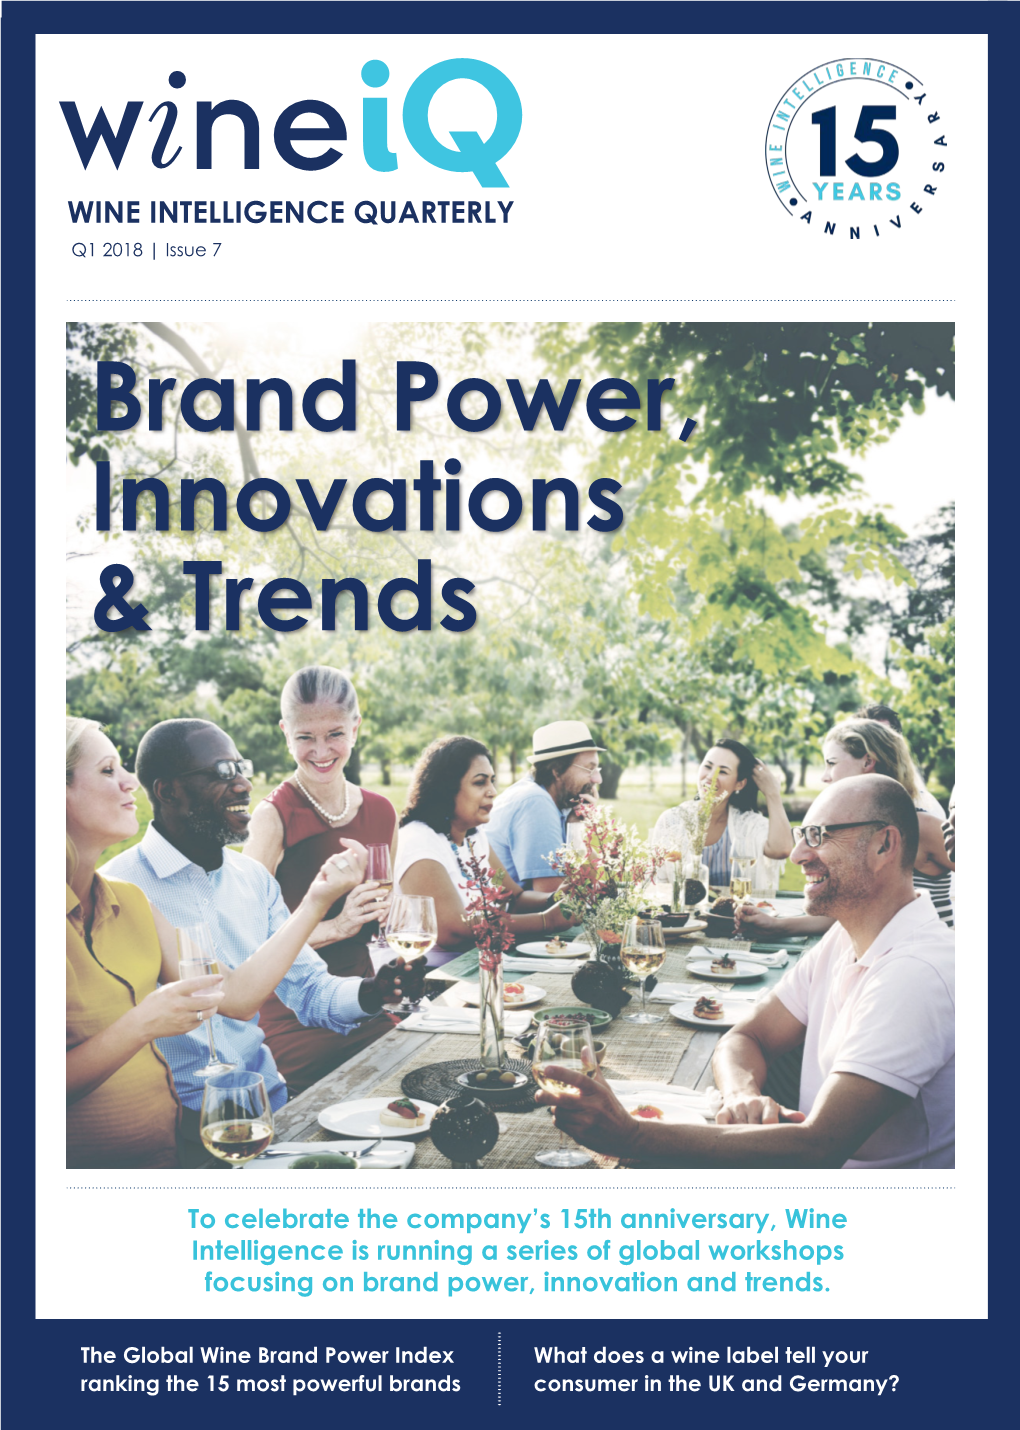 Brand Power, Innovations & Trends